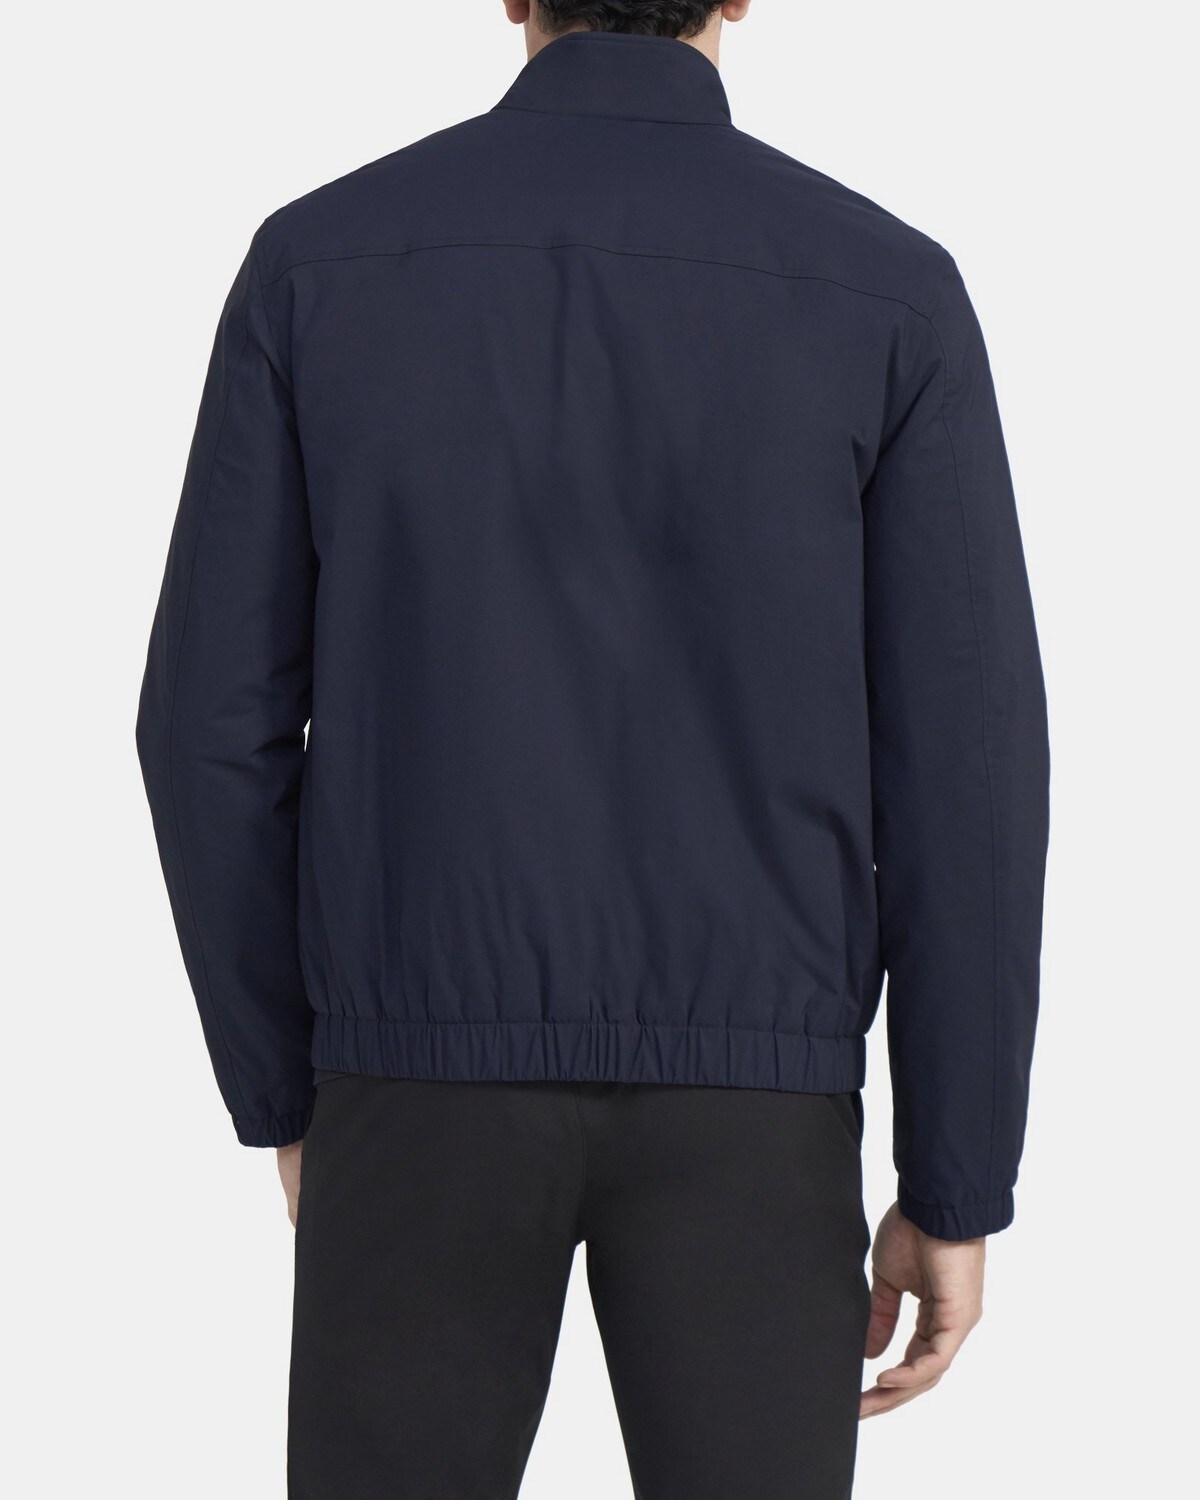 Zip Jacket in Tech Cotton-Blend